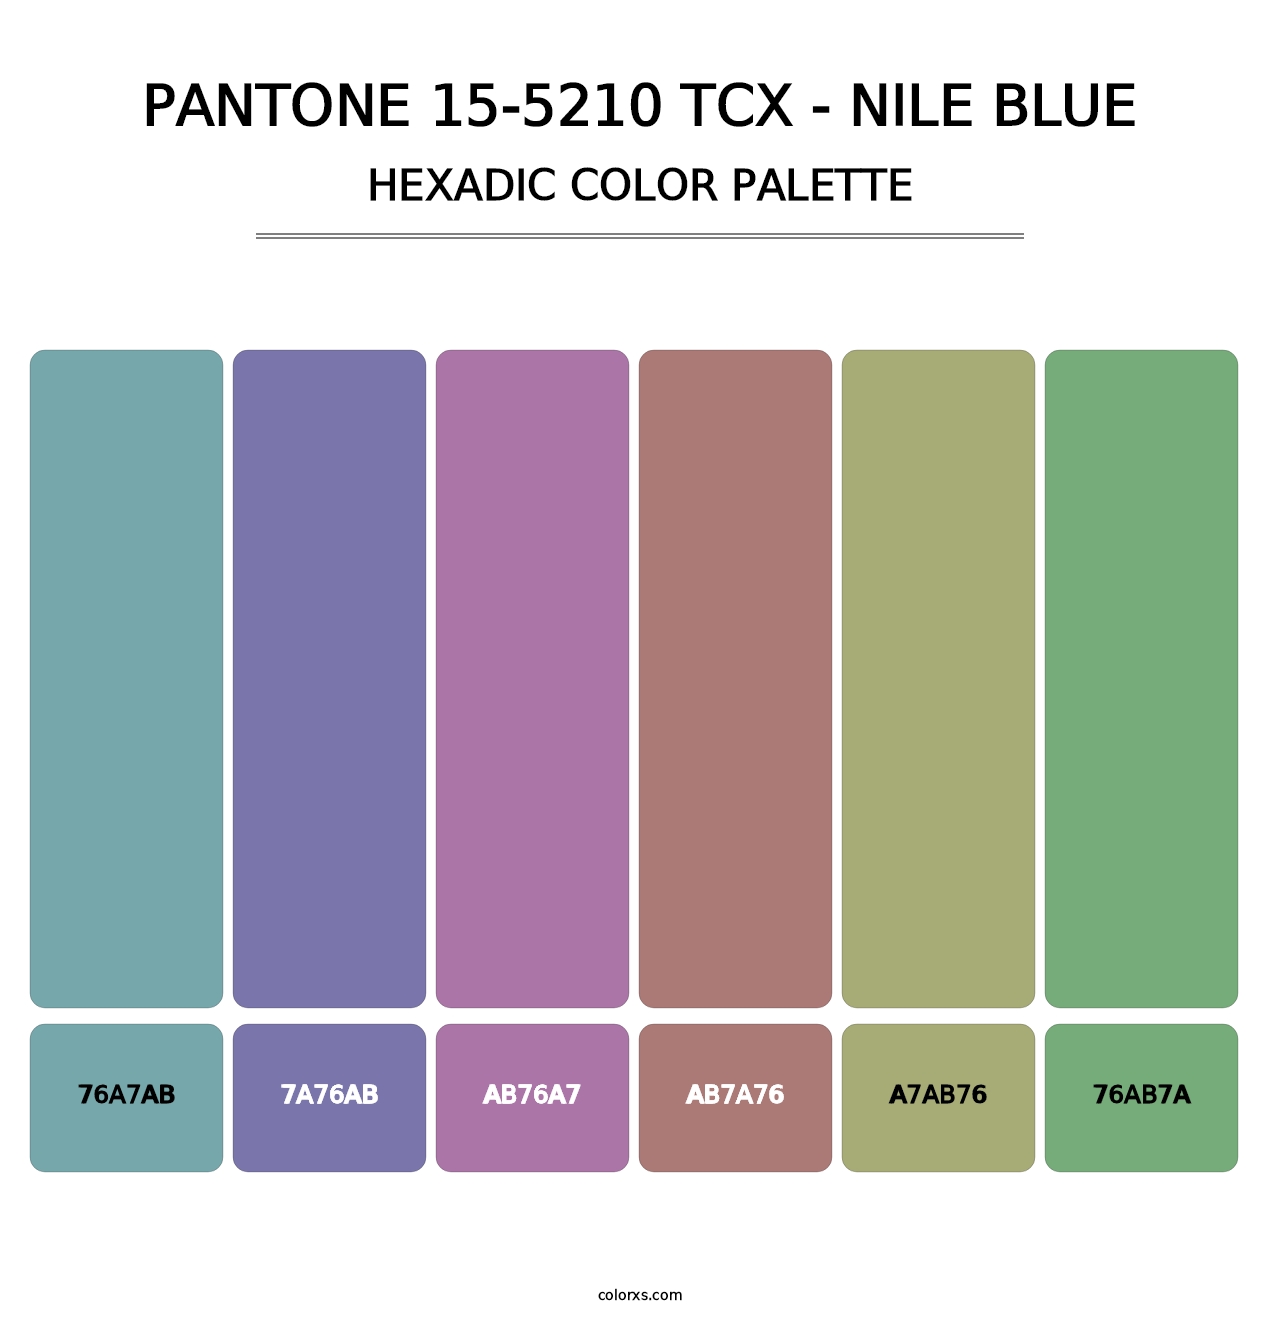 PANTONE 15-5210 TCX - Nile Blue - Hexadic Color Palette